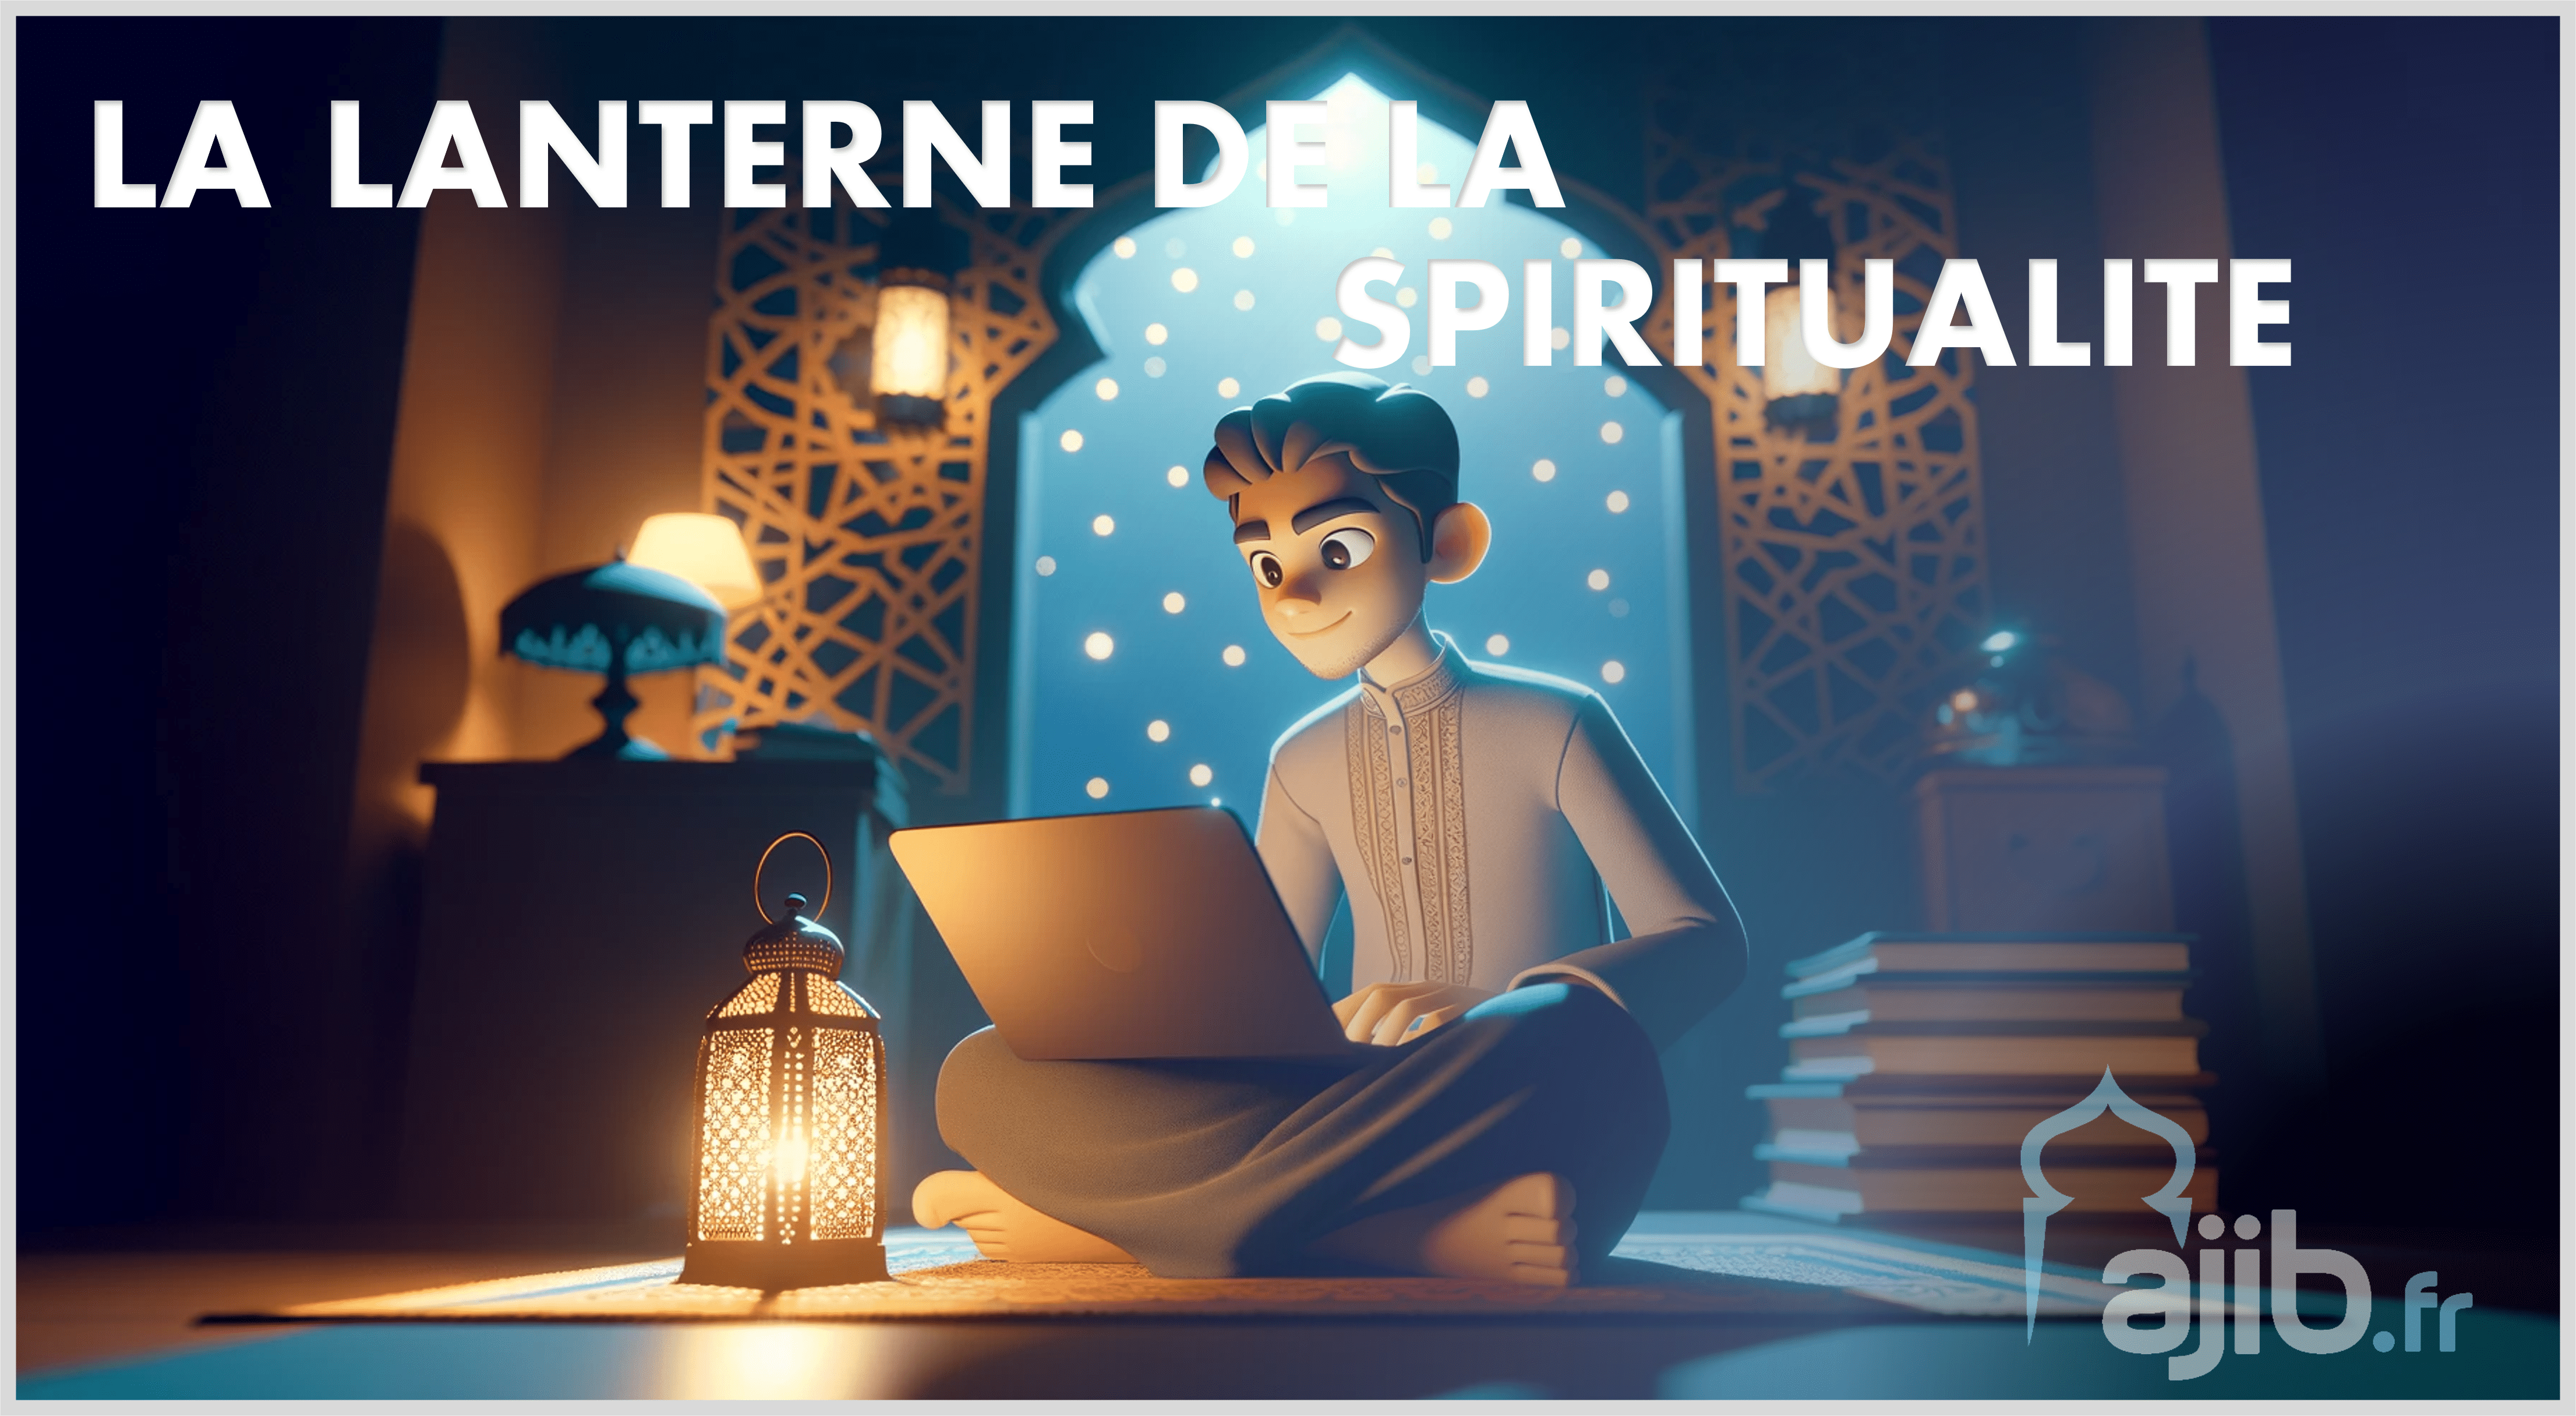 La lanterne de la spiritualité